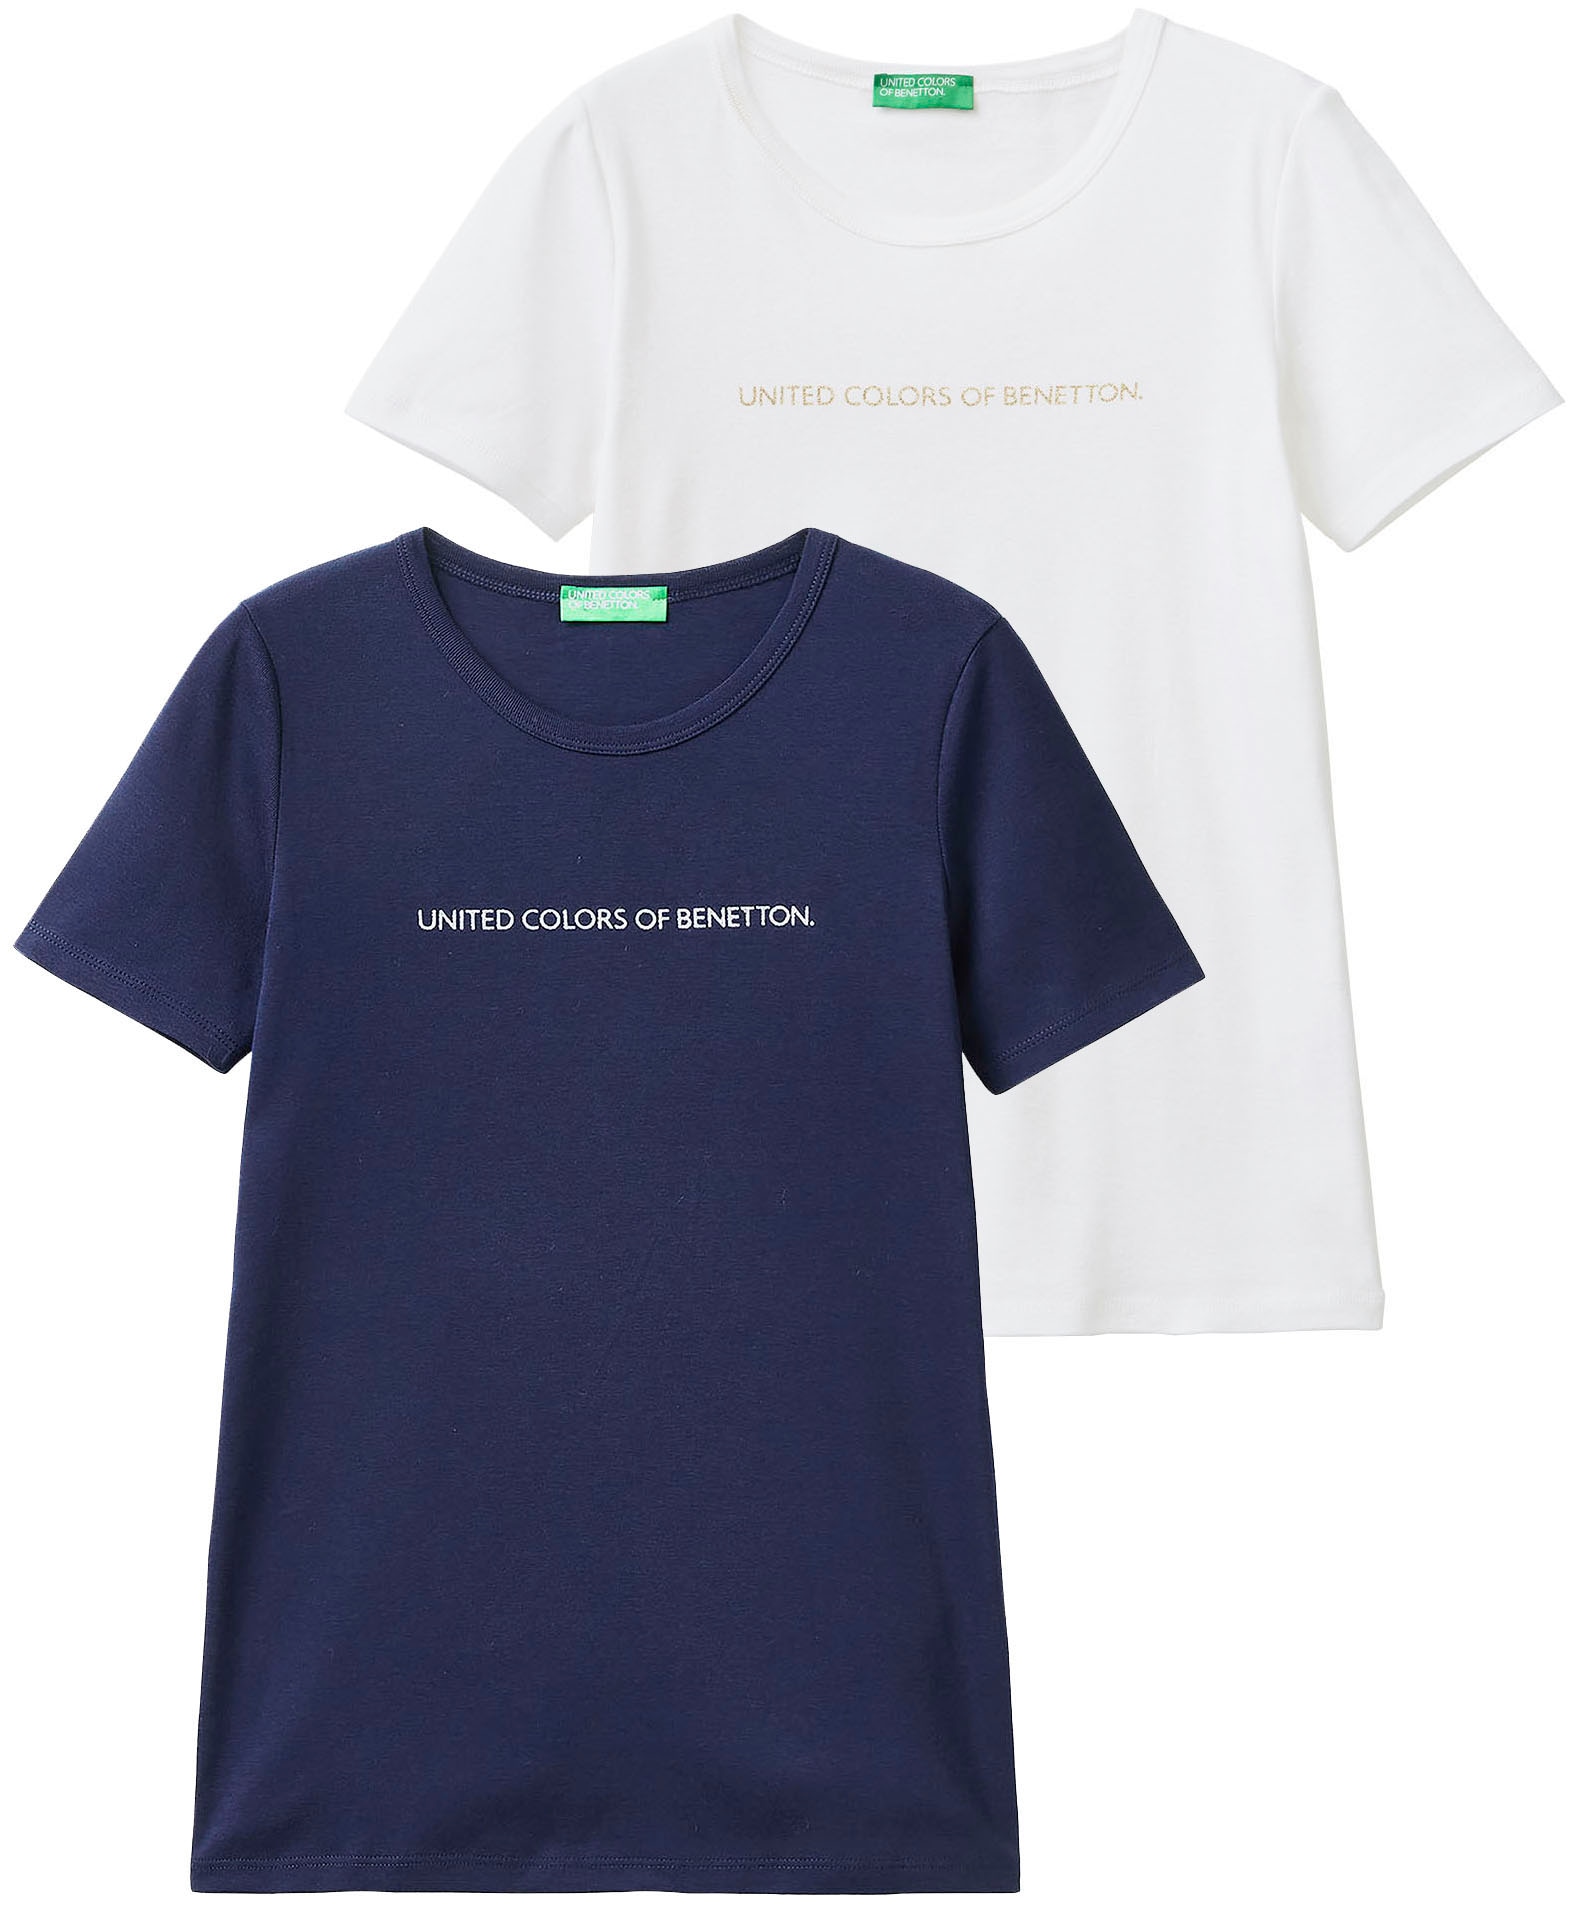 im tlg., bei United Doppelpack ♕ 2 unsere of (Set, Benetton Colors 2), T-Shirt, Bestseller